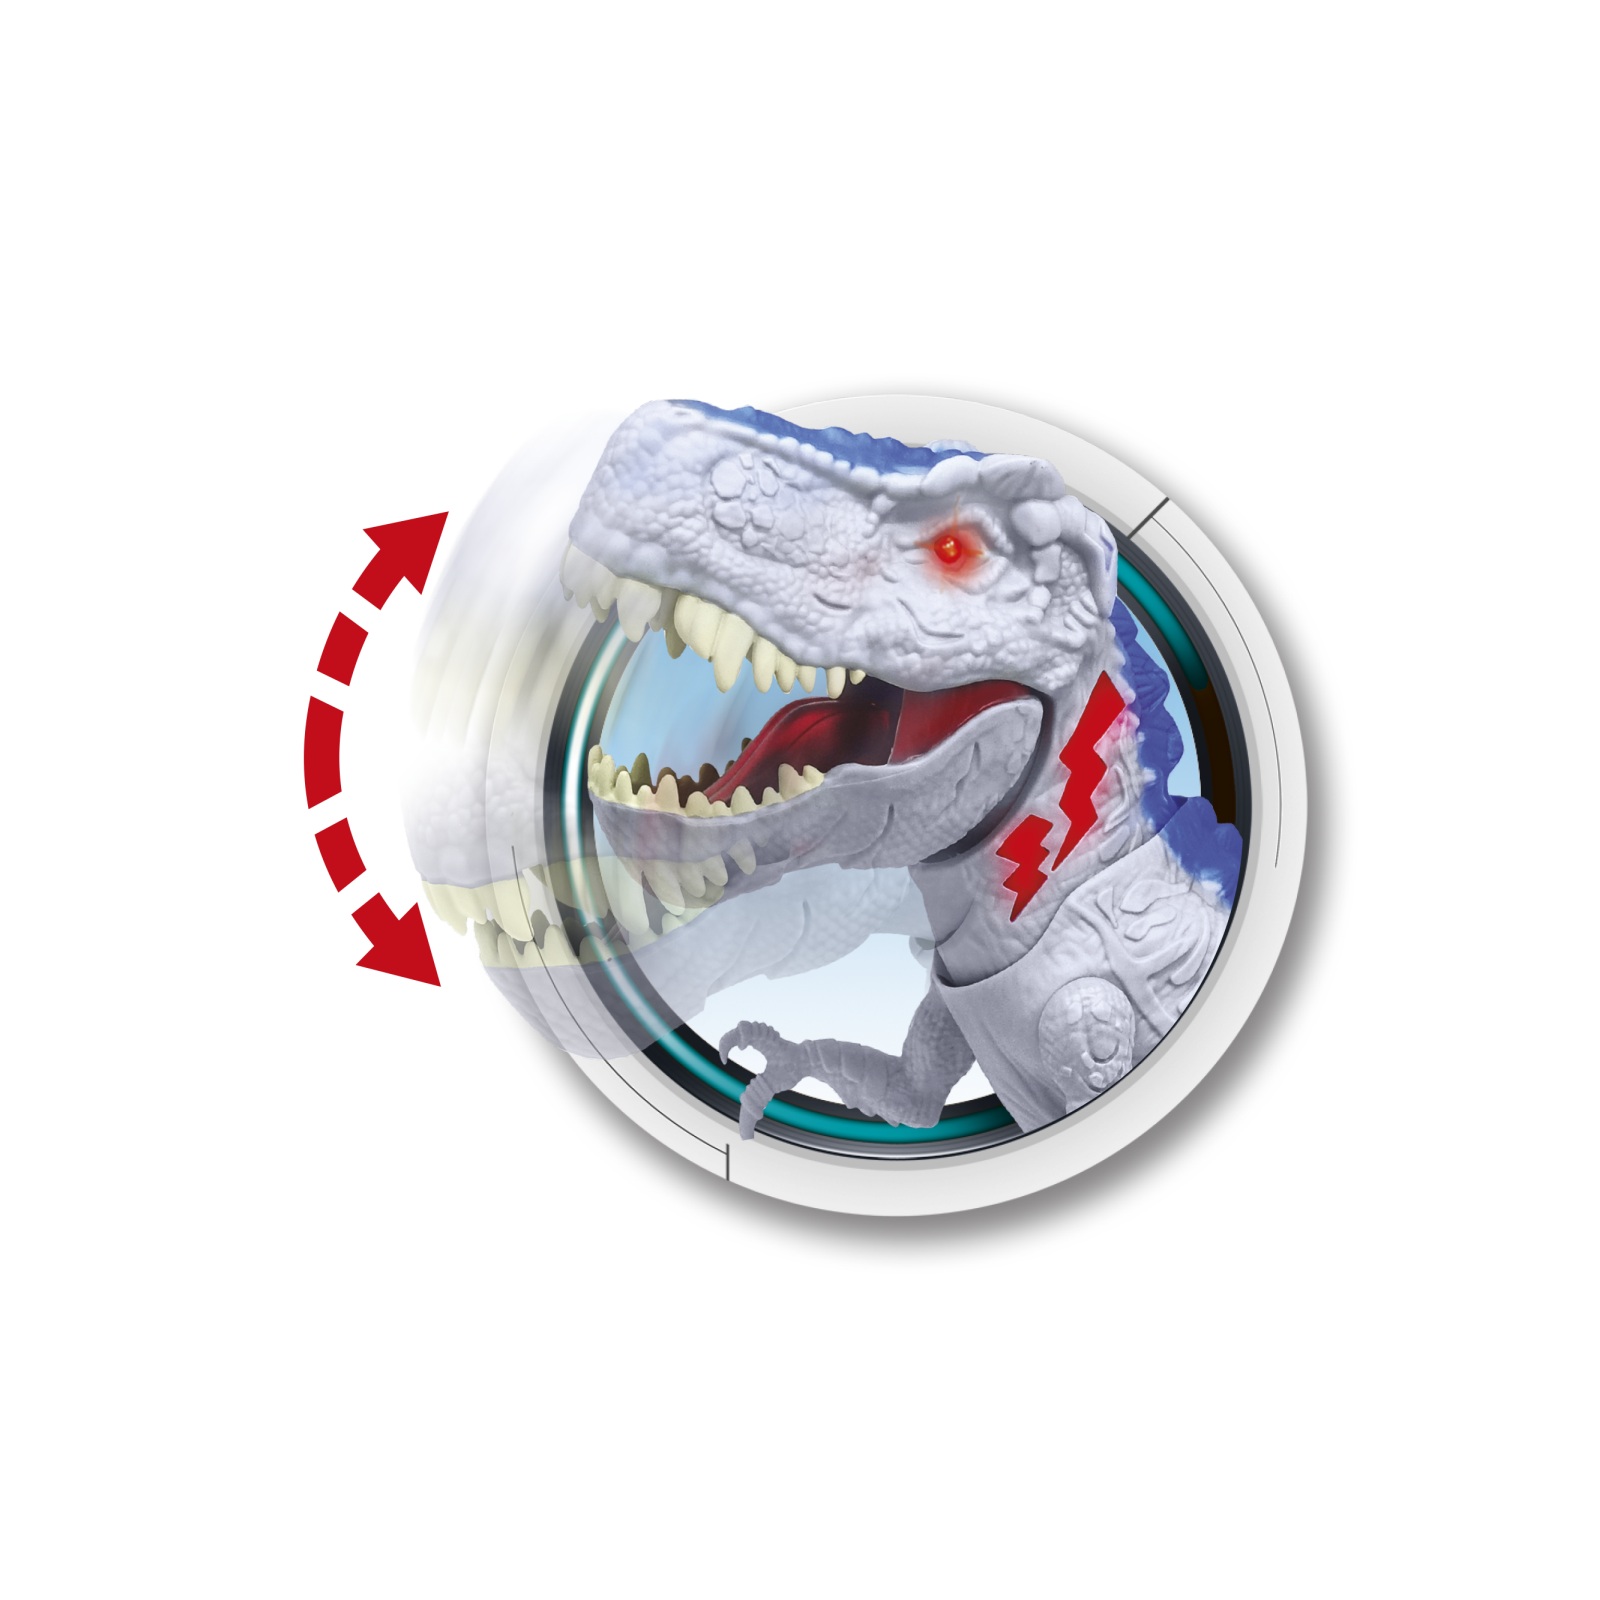 Dinosauro t - rex - INVINCIBLE HEROES